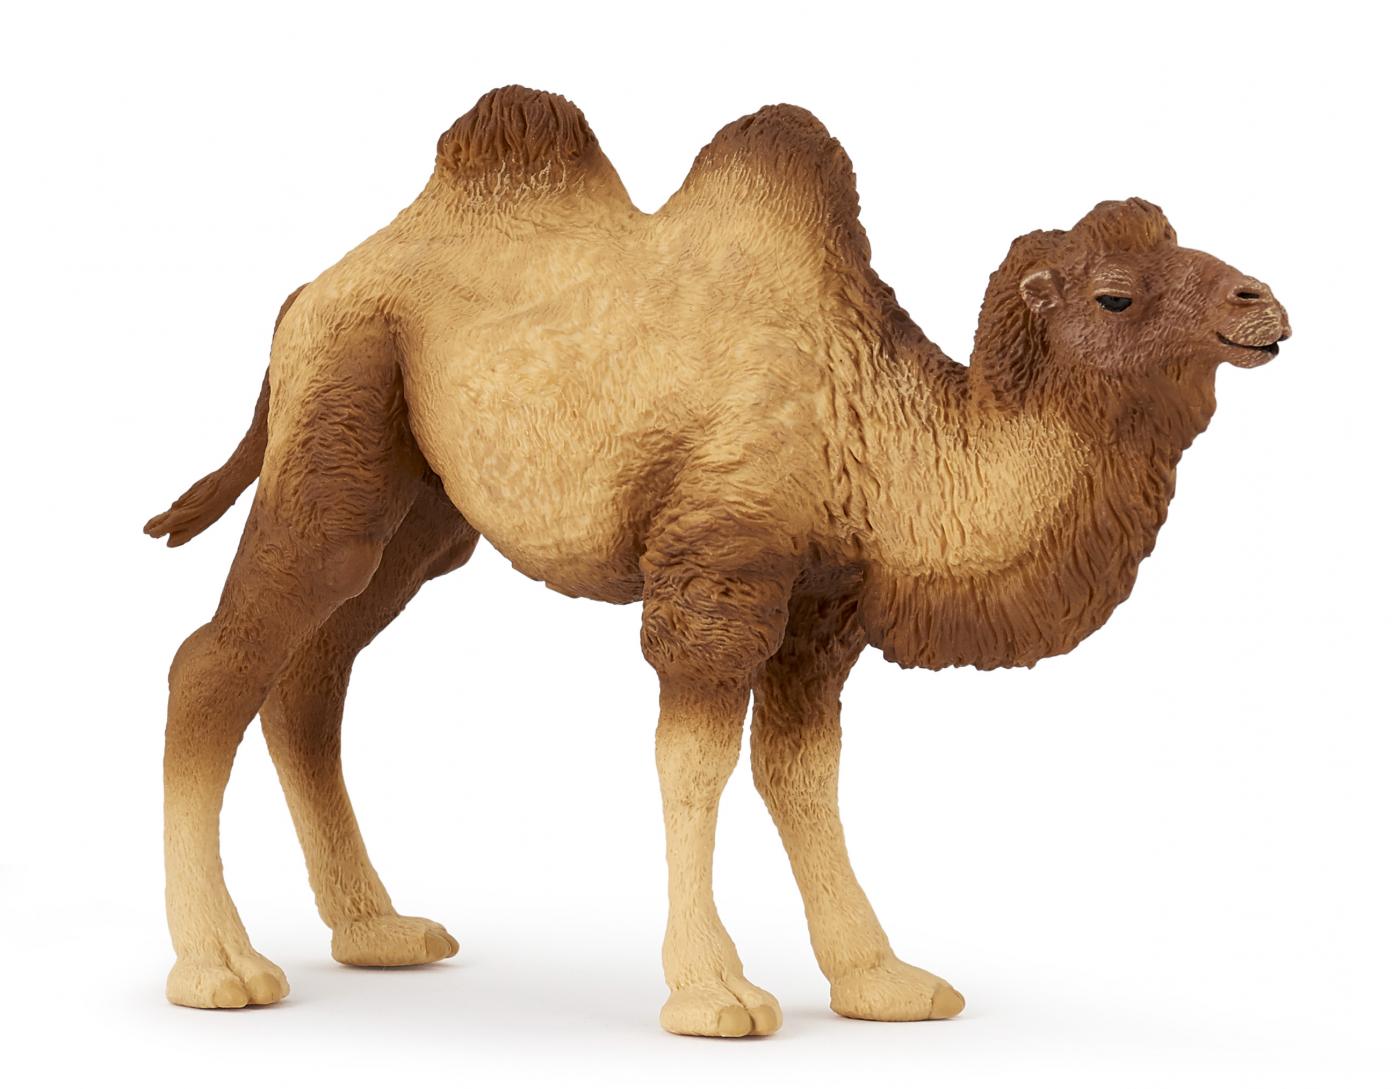 Papo Baktrisches Kamel Tierfiguren Figuren Bei Spielzeug Guenstig De